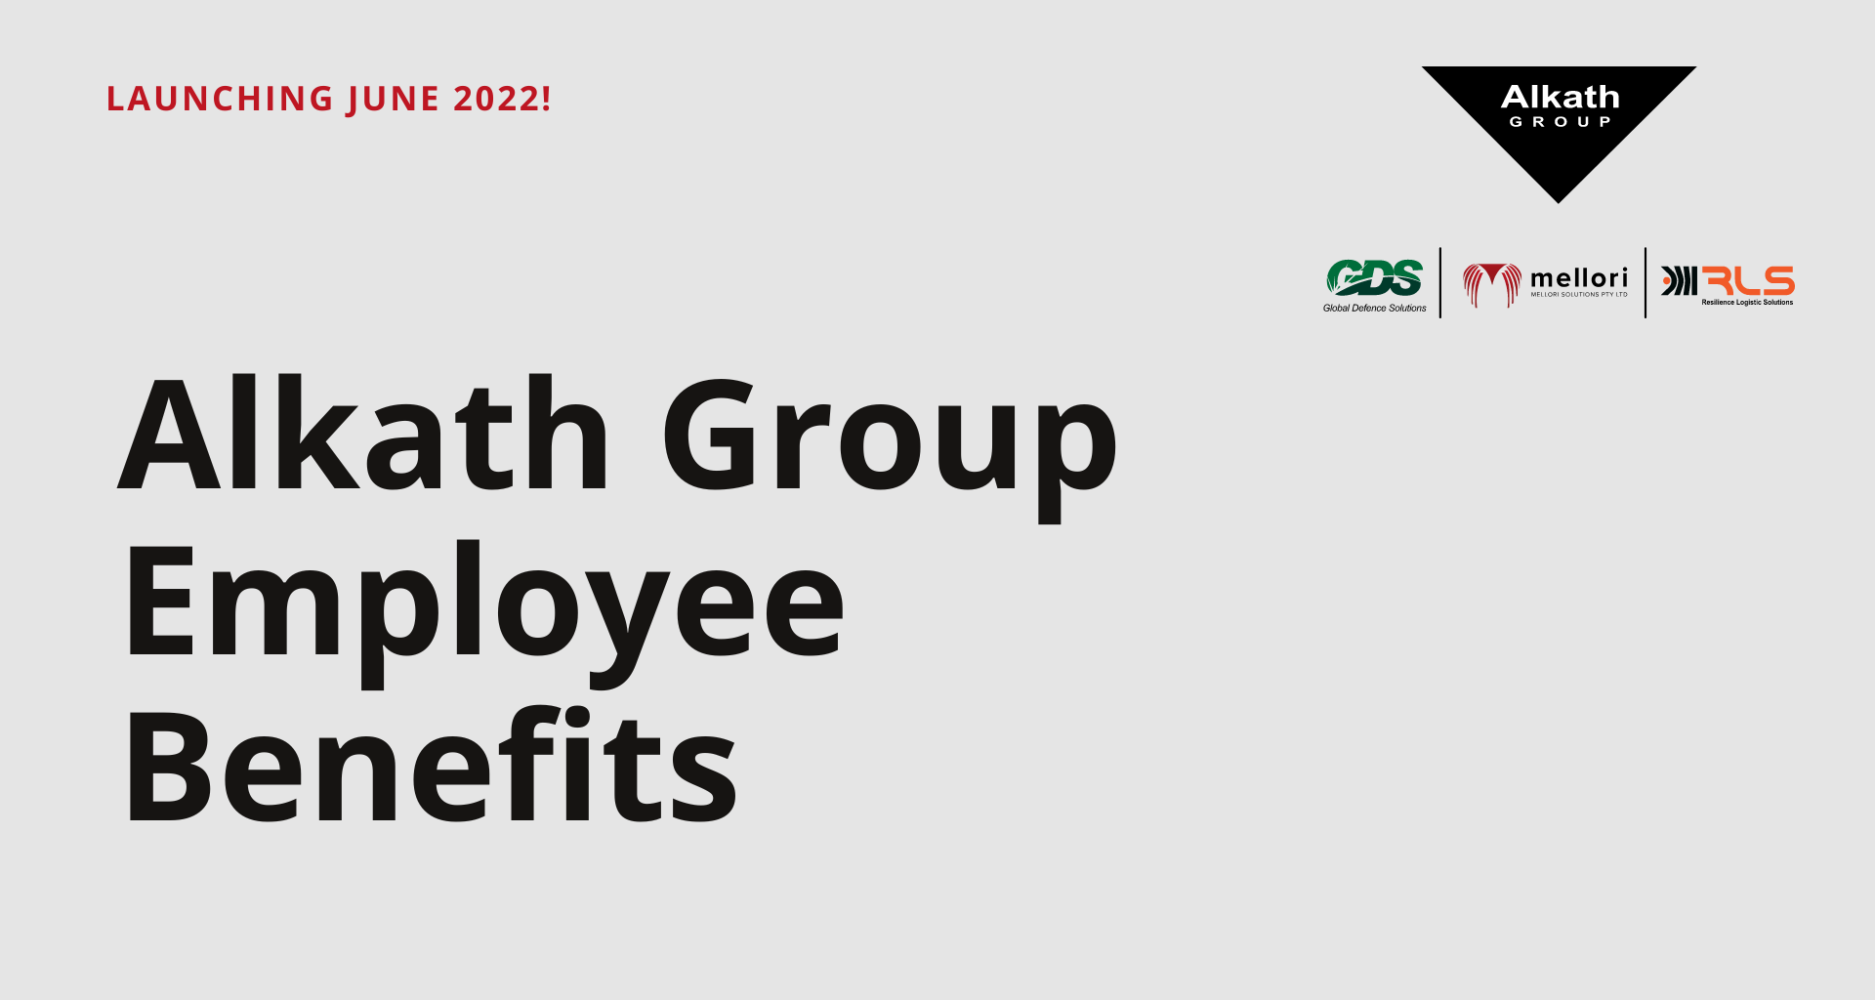 Launching June 2022… Alkath Group Employee Benefits!